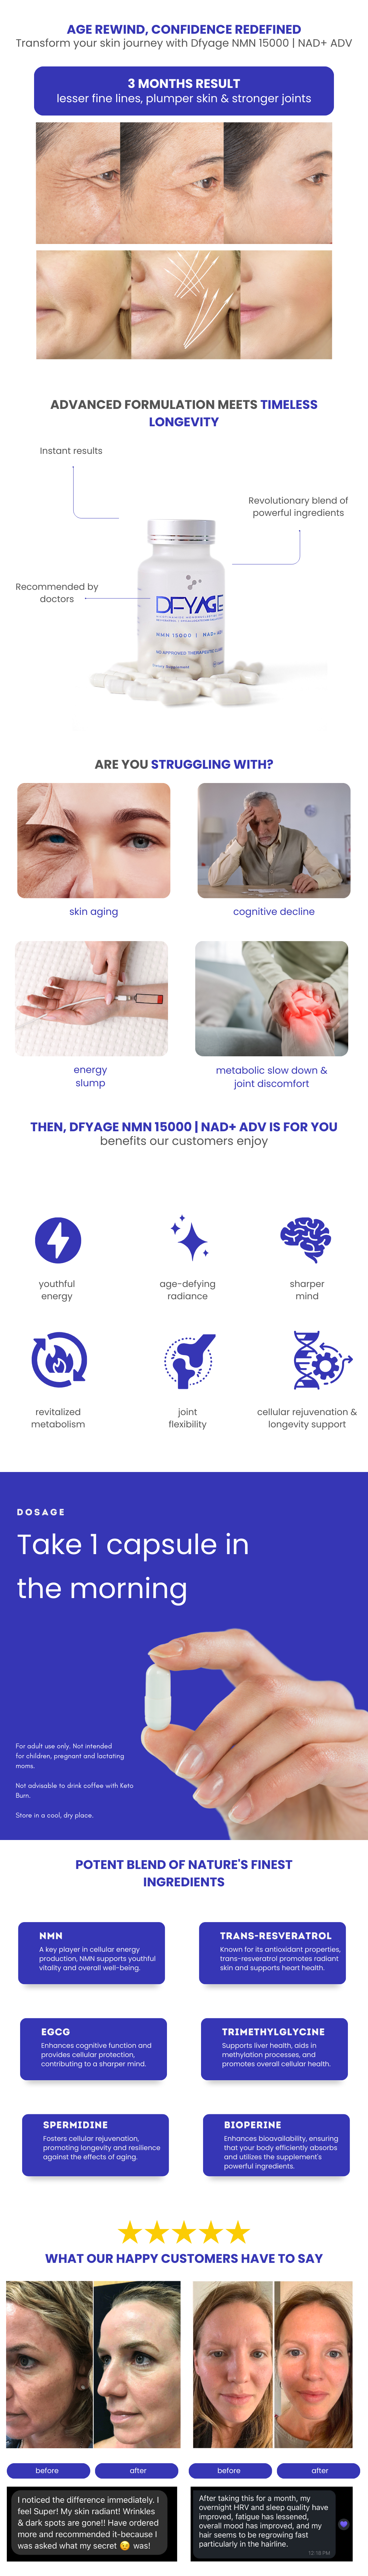 Dfyage NMN NAD+ ADV